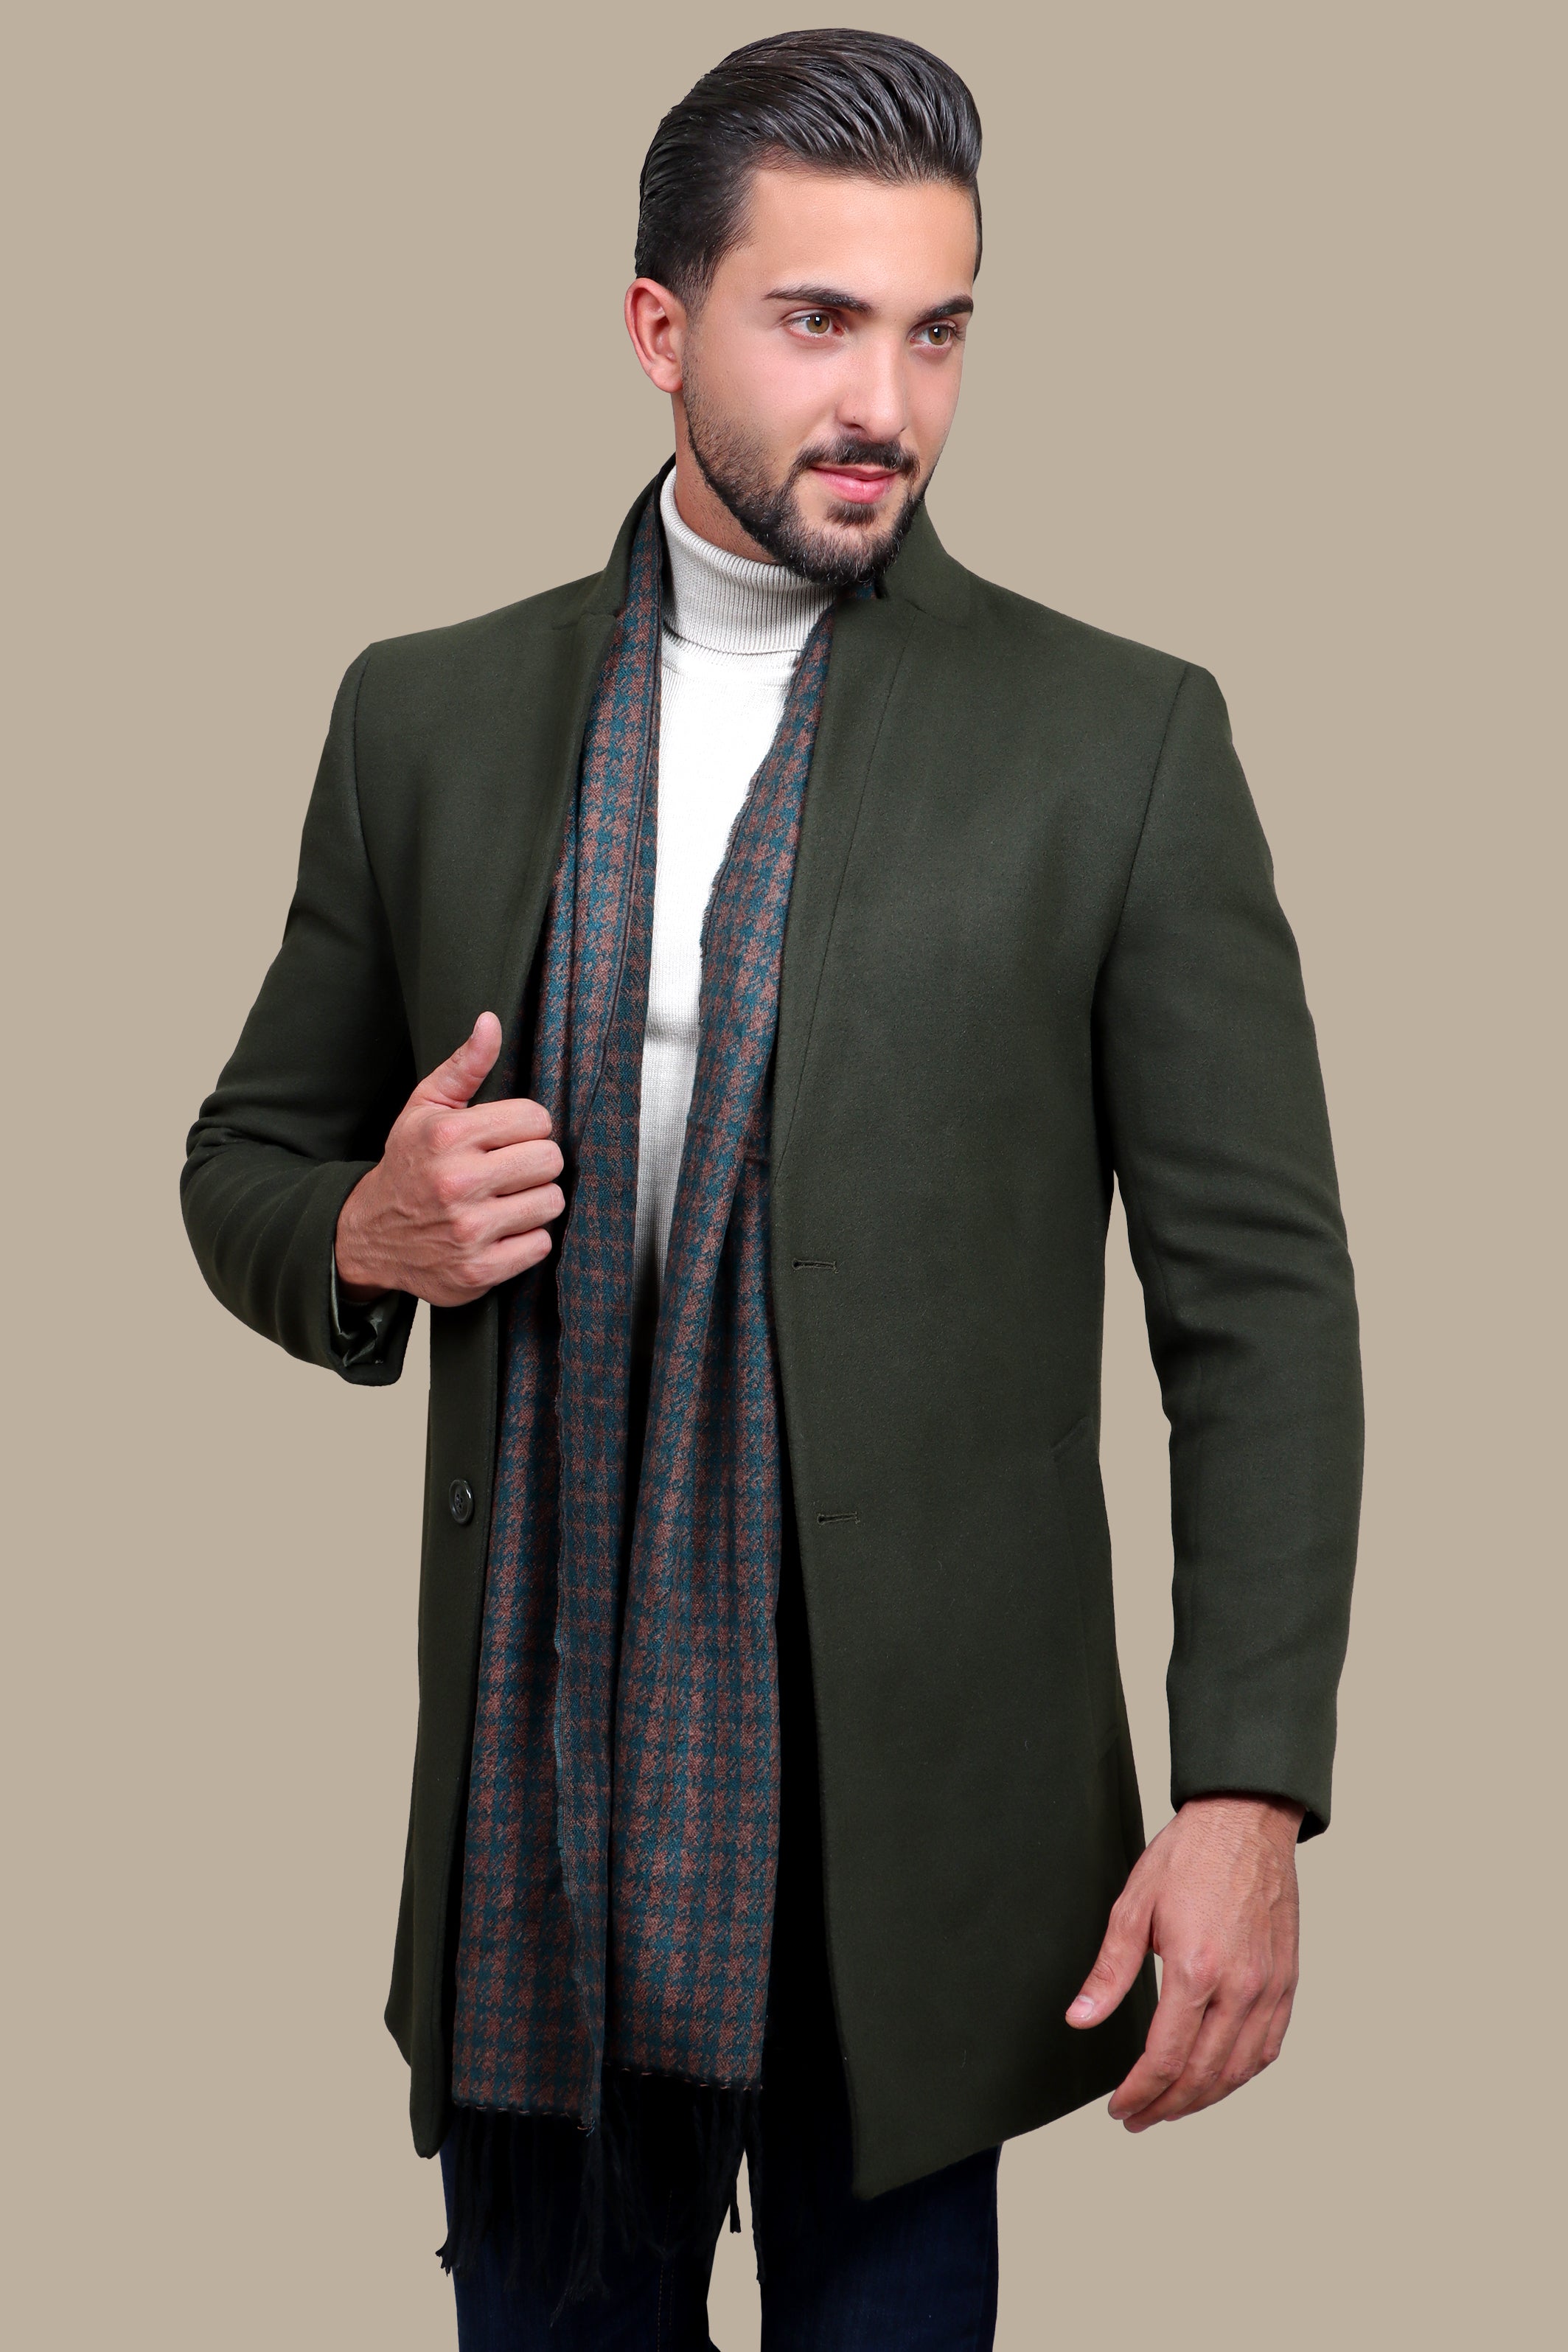 Khaki Classic: Embrace Timeless Style with the Coat Col Mao in Basic Khaki